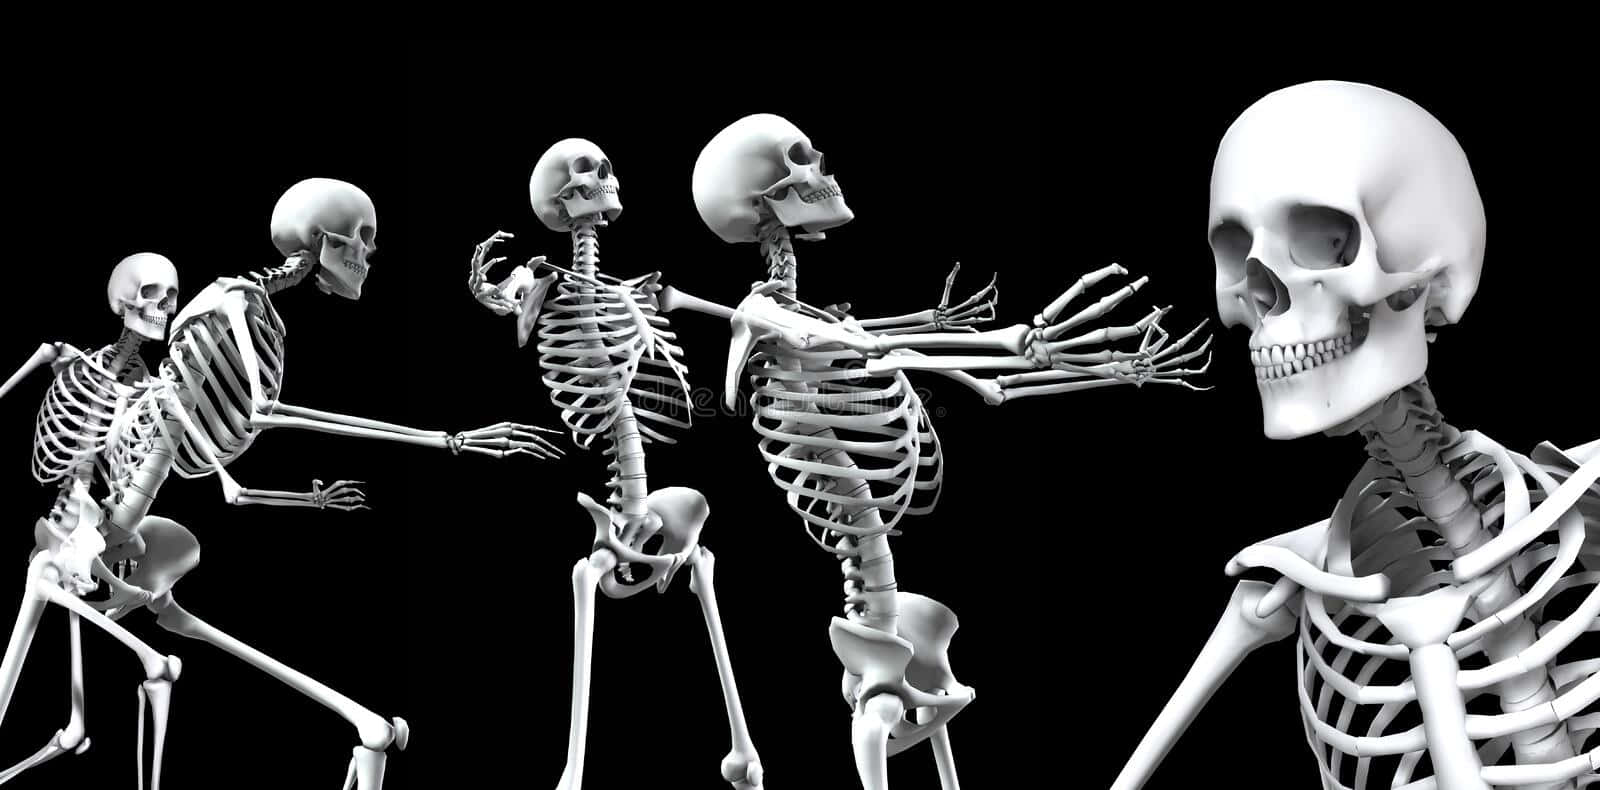 Fremvisdit Bedste Halloween Look Med En Skelet!